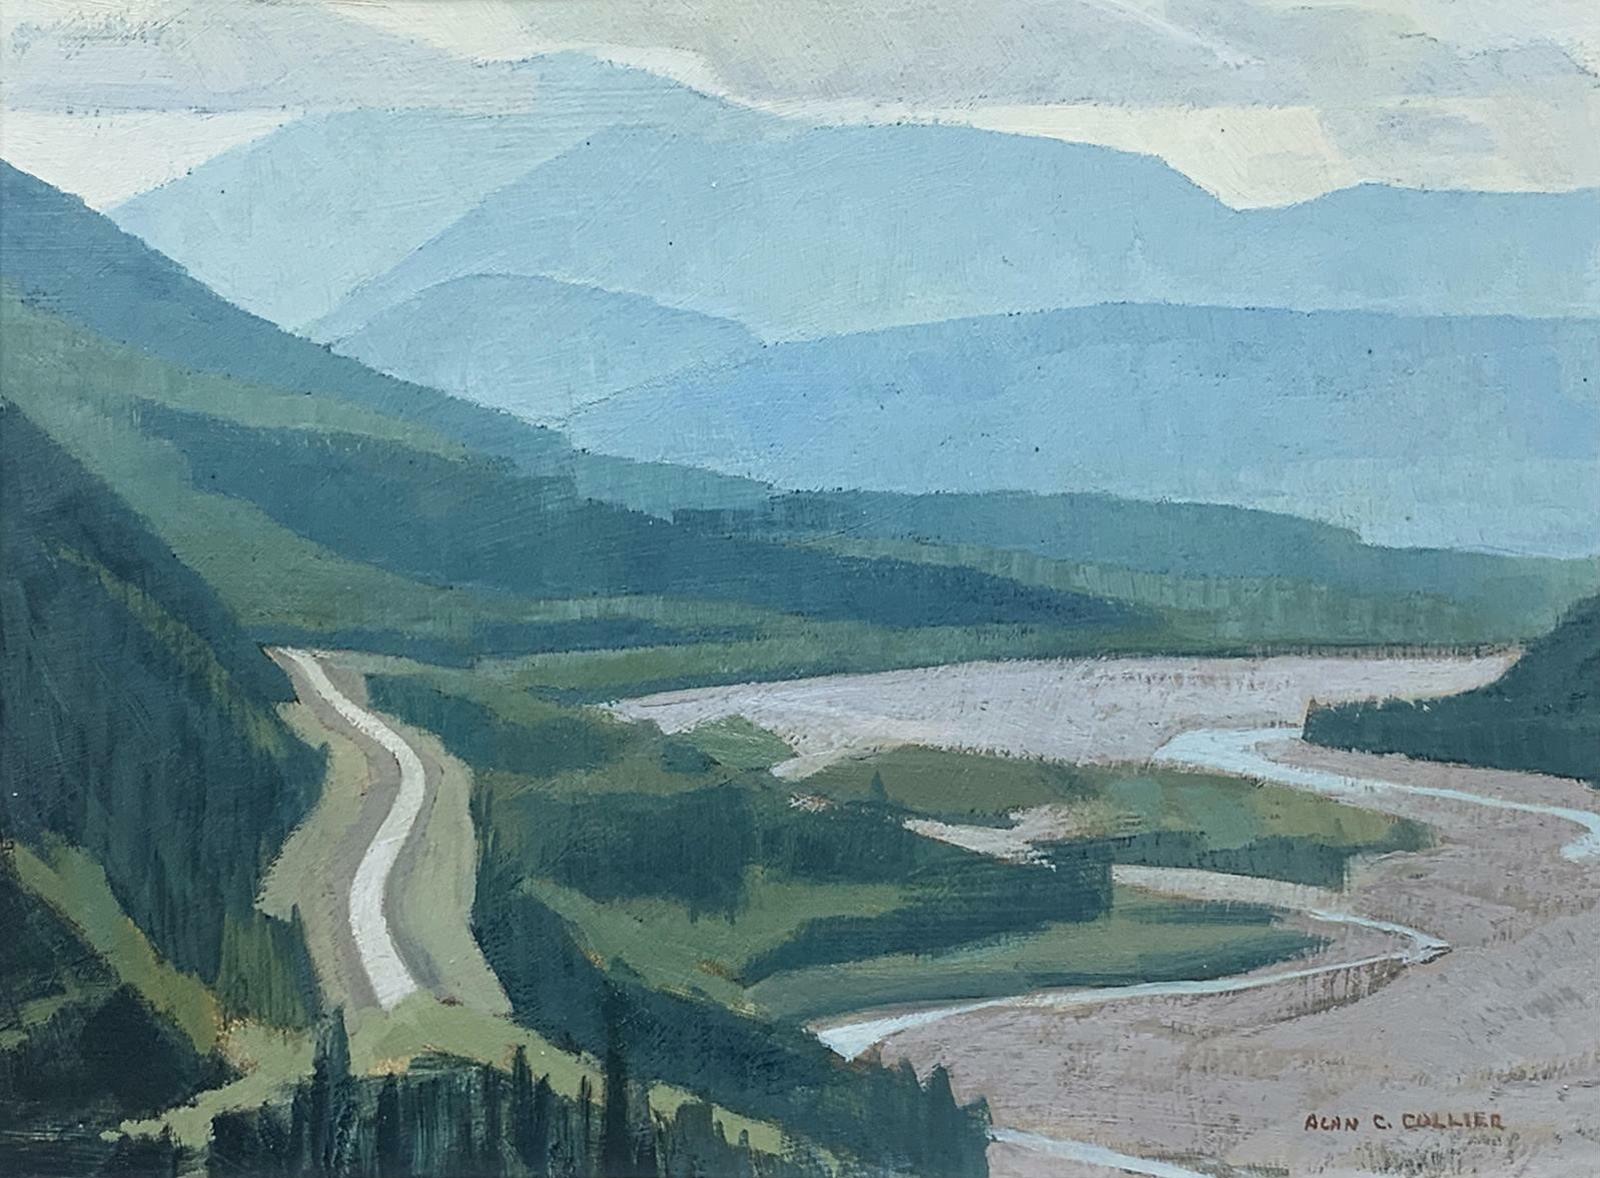 Alan Caswell Collier (1911-1990) - The Alaska Highway